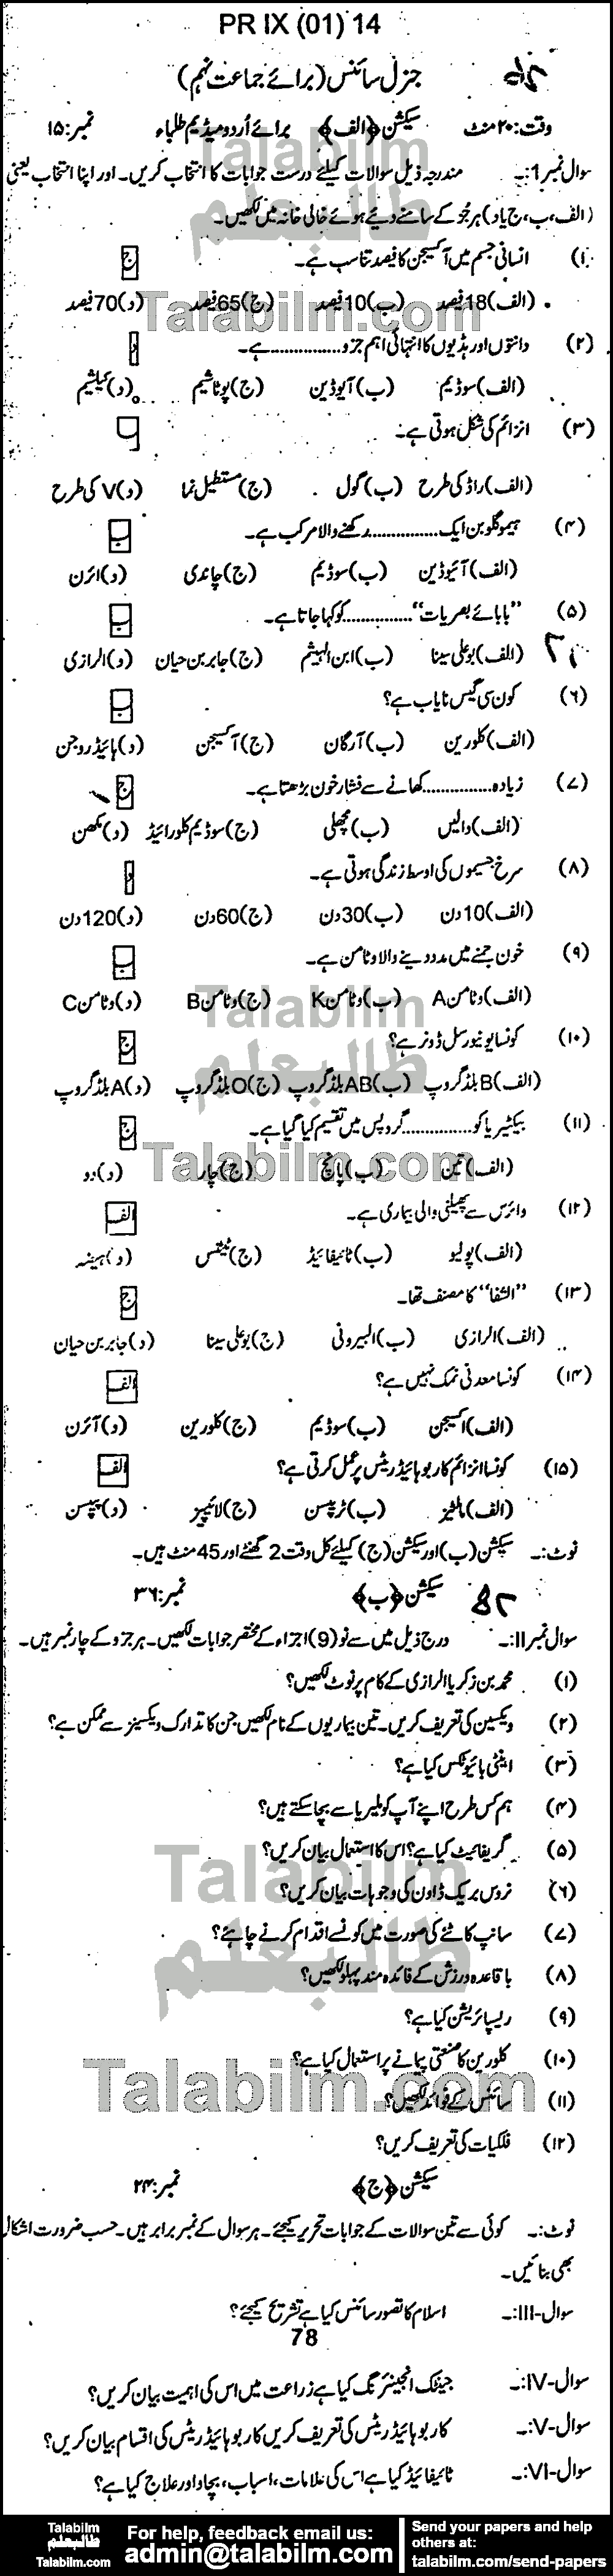 General Science 0 past paper for Urdu Medium 2014 Group-I